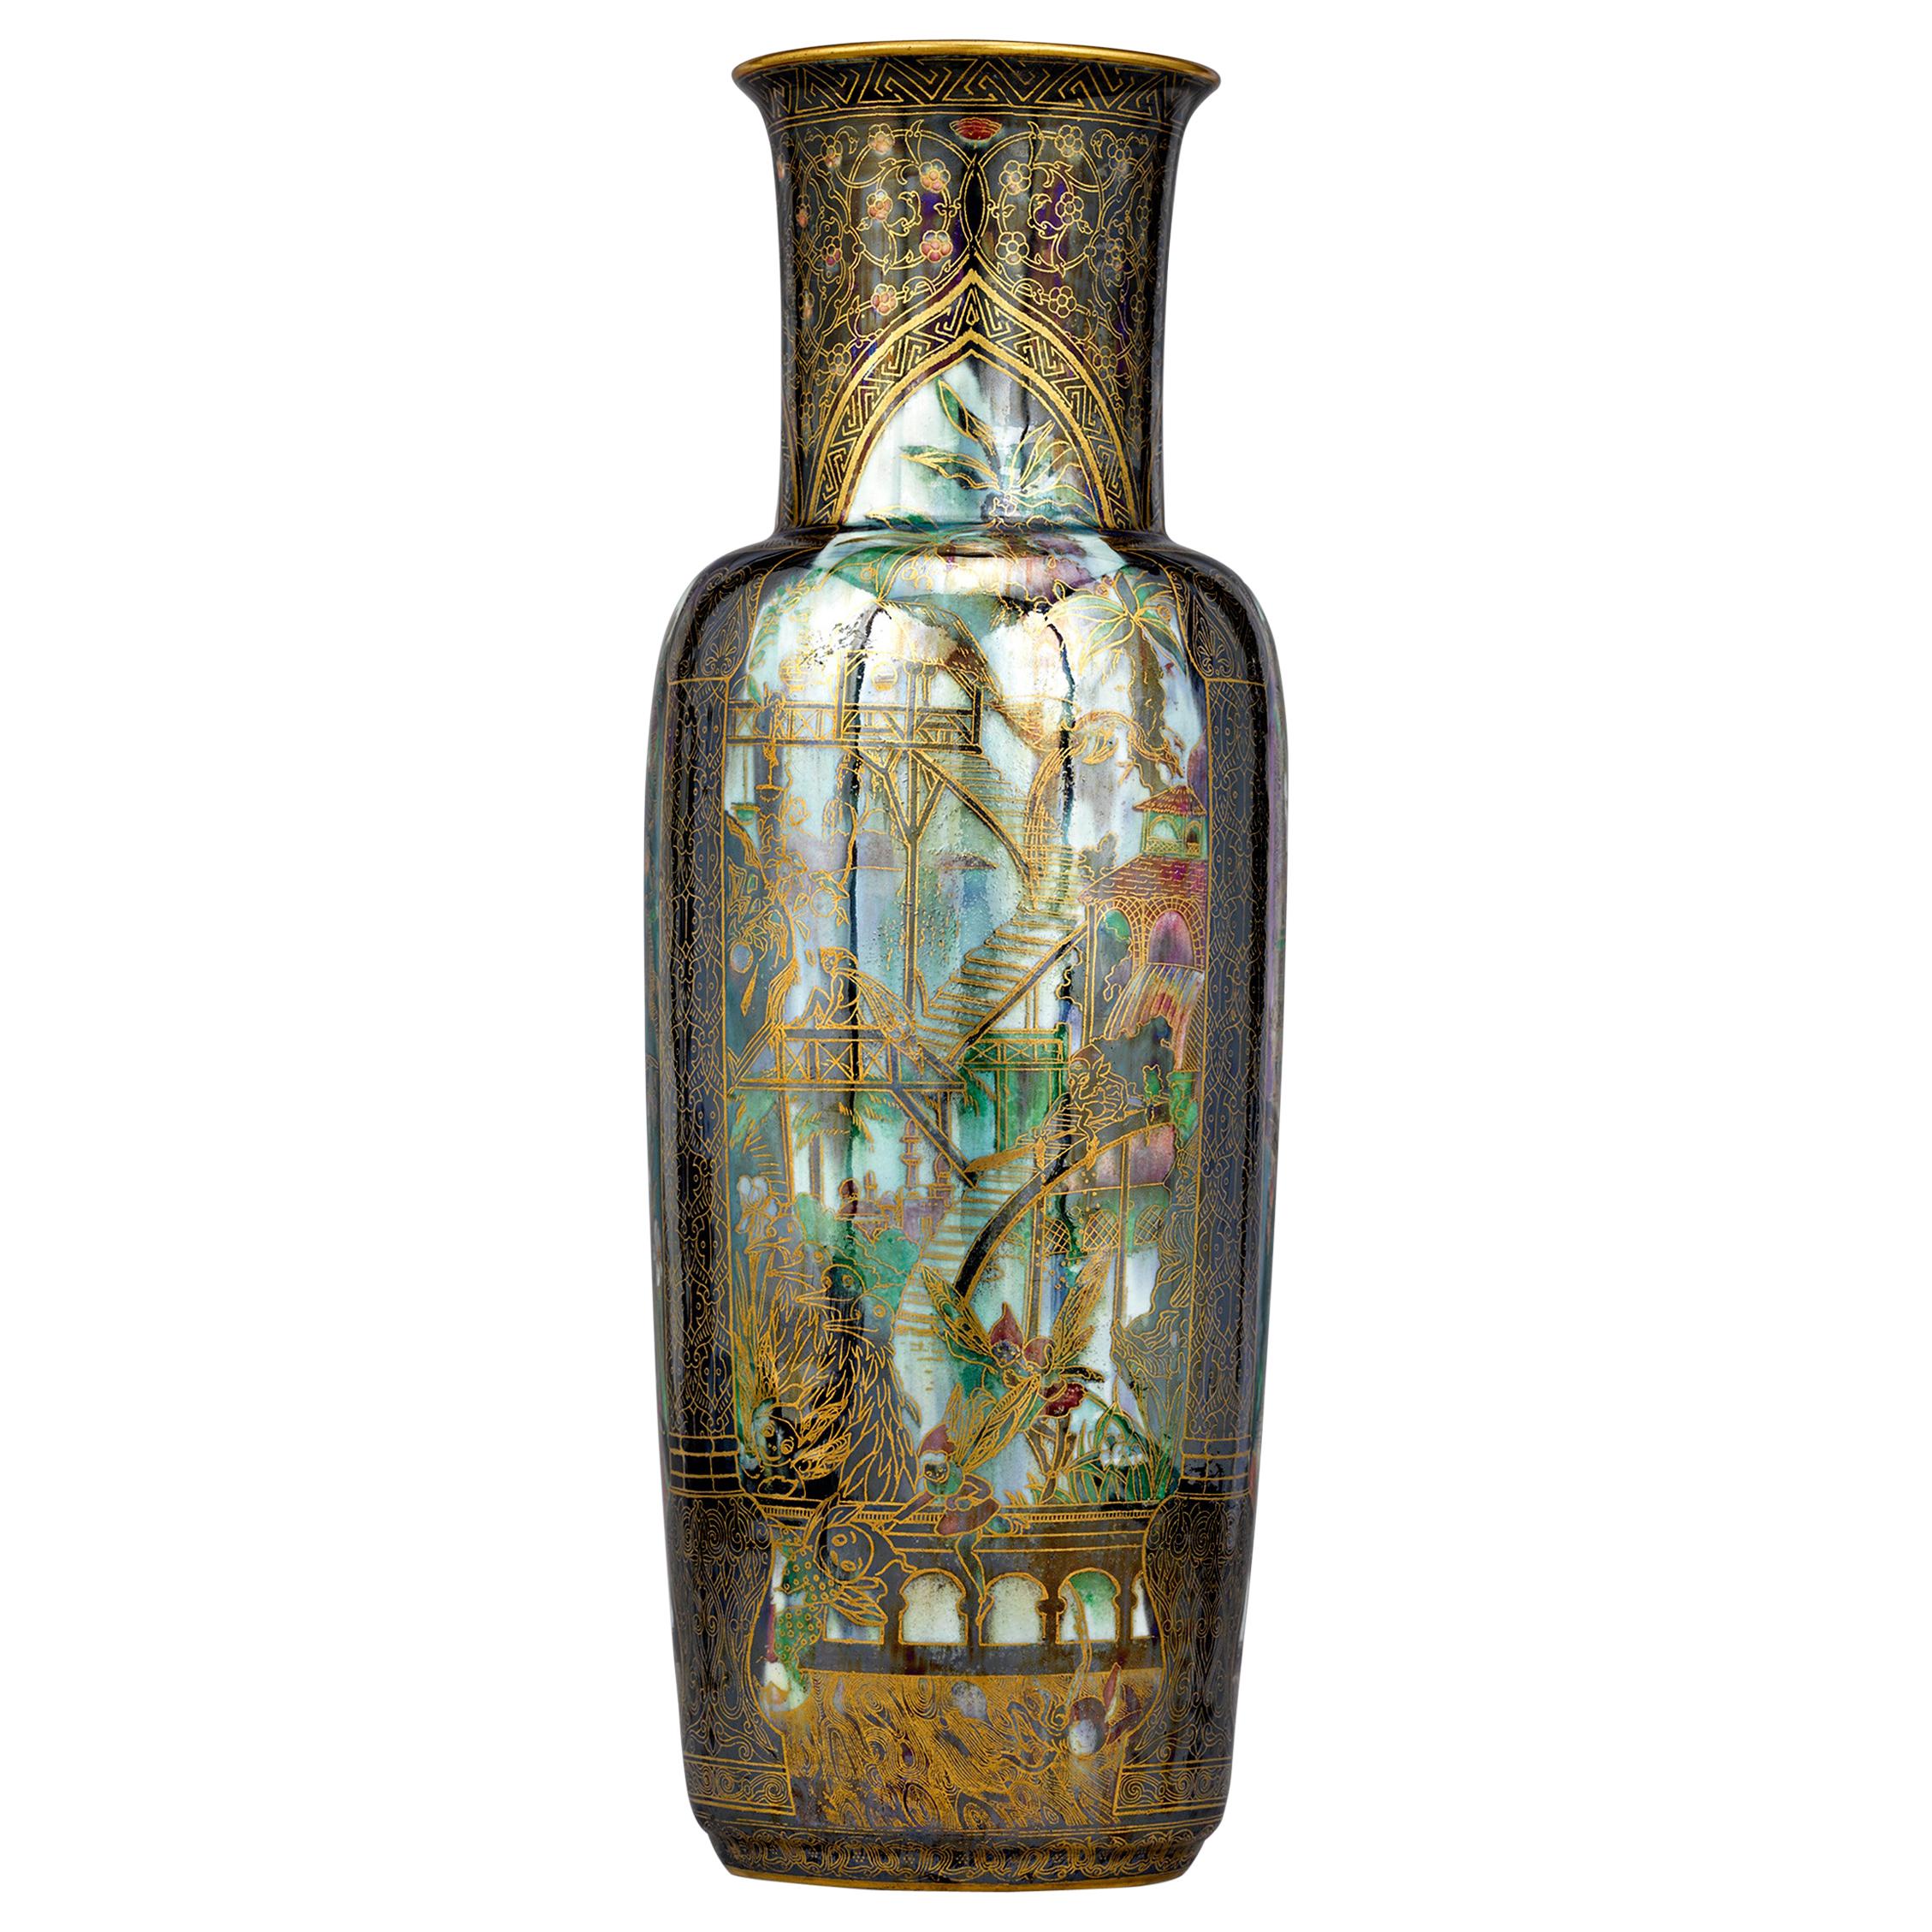 Fairyland Lustre Pillar Vase by Wedgwood